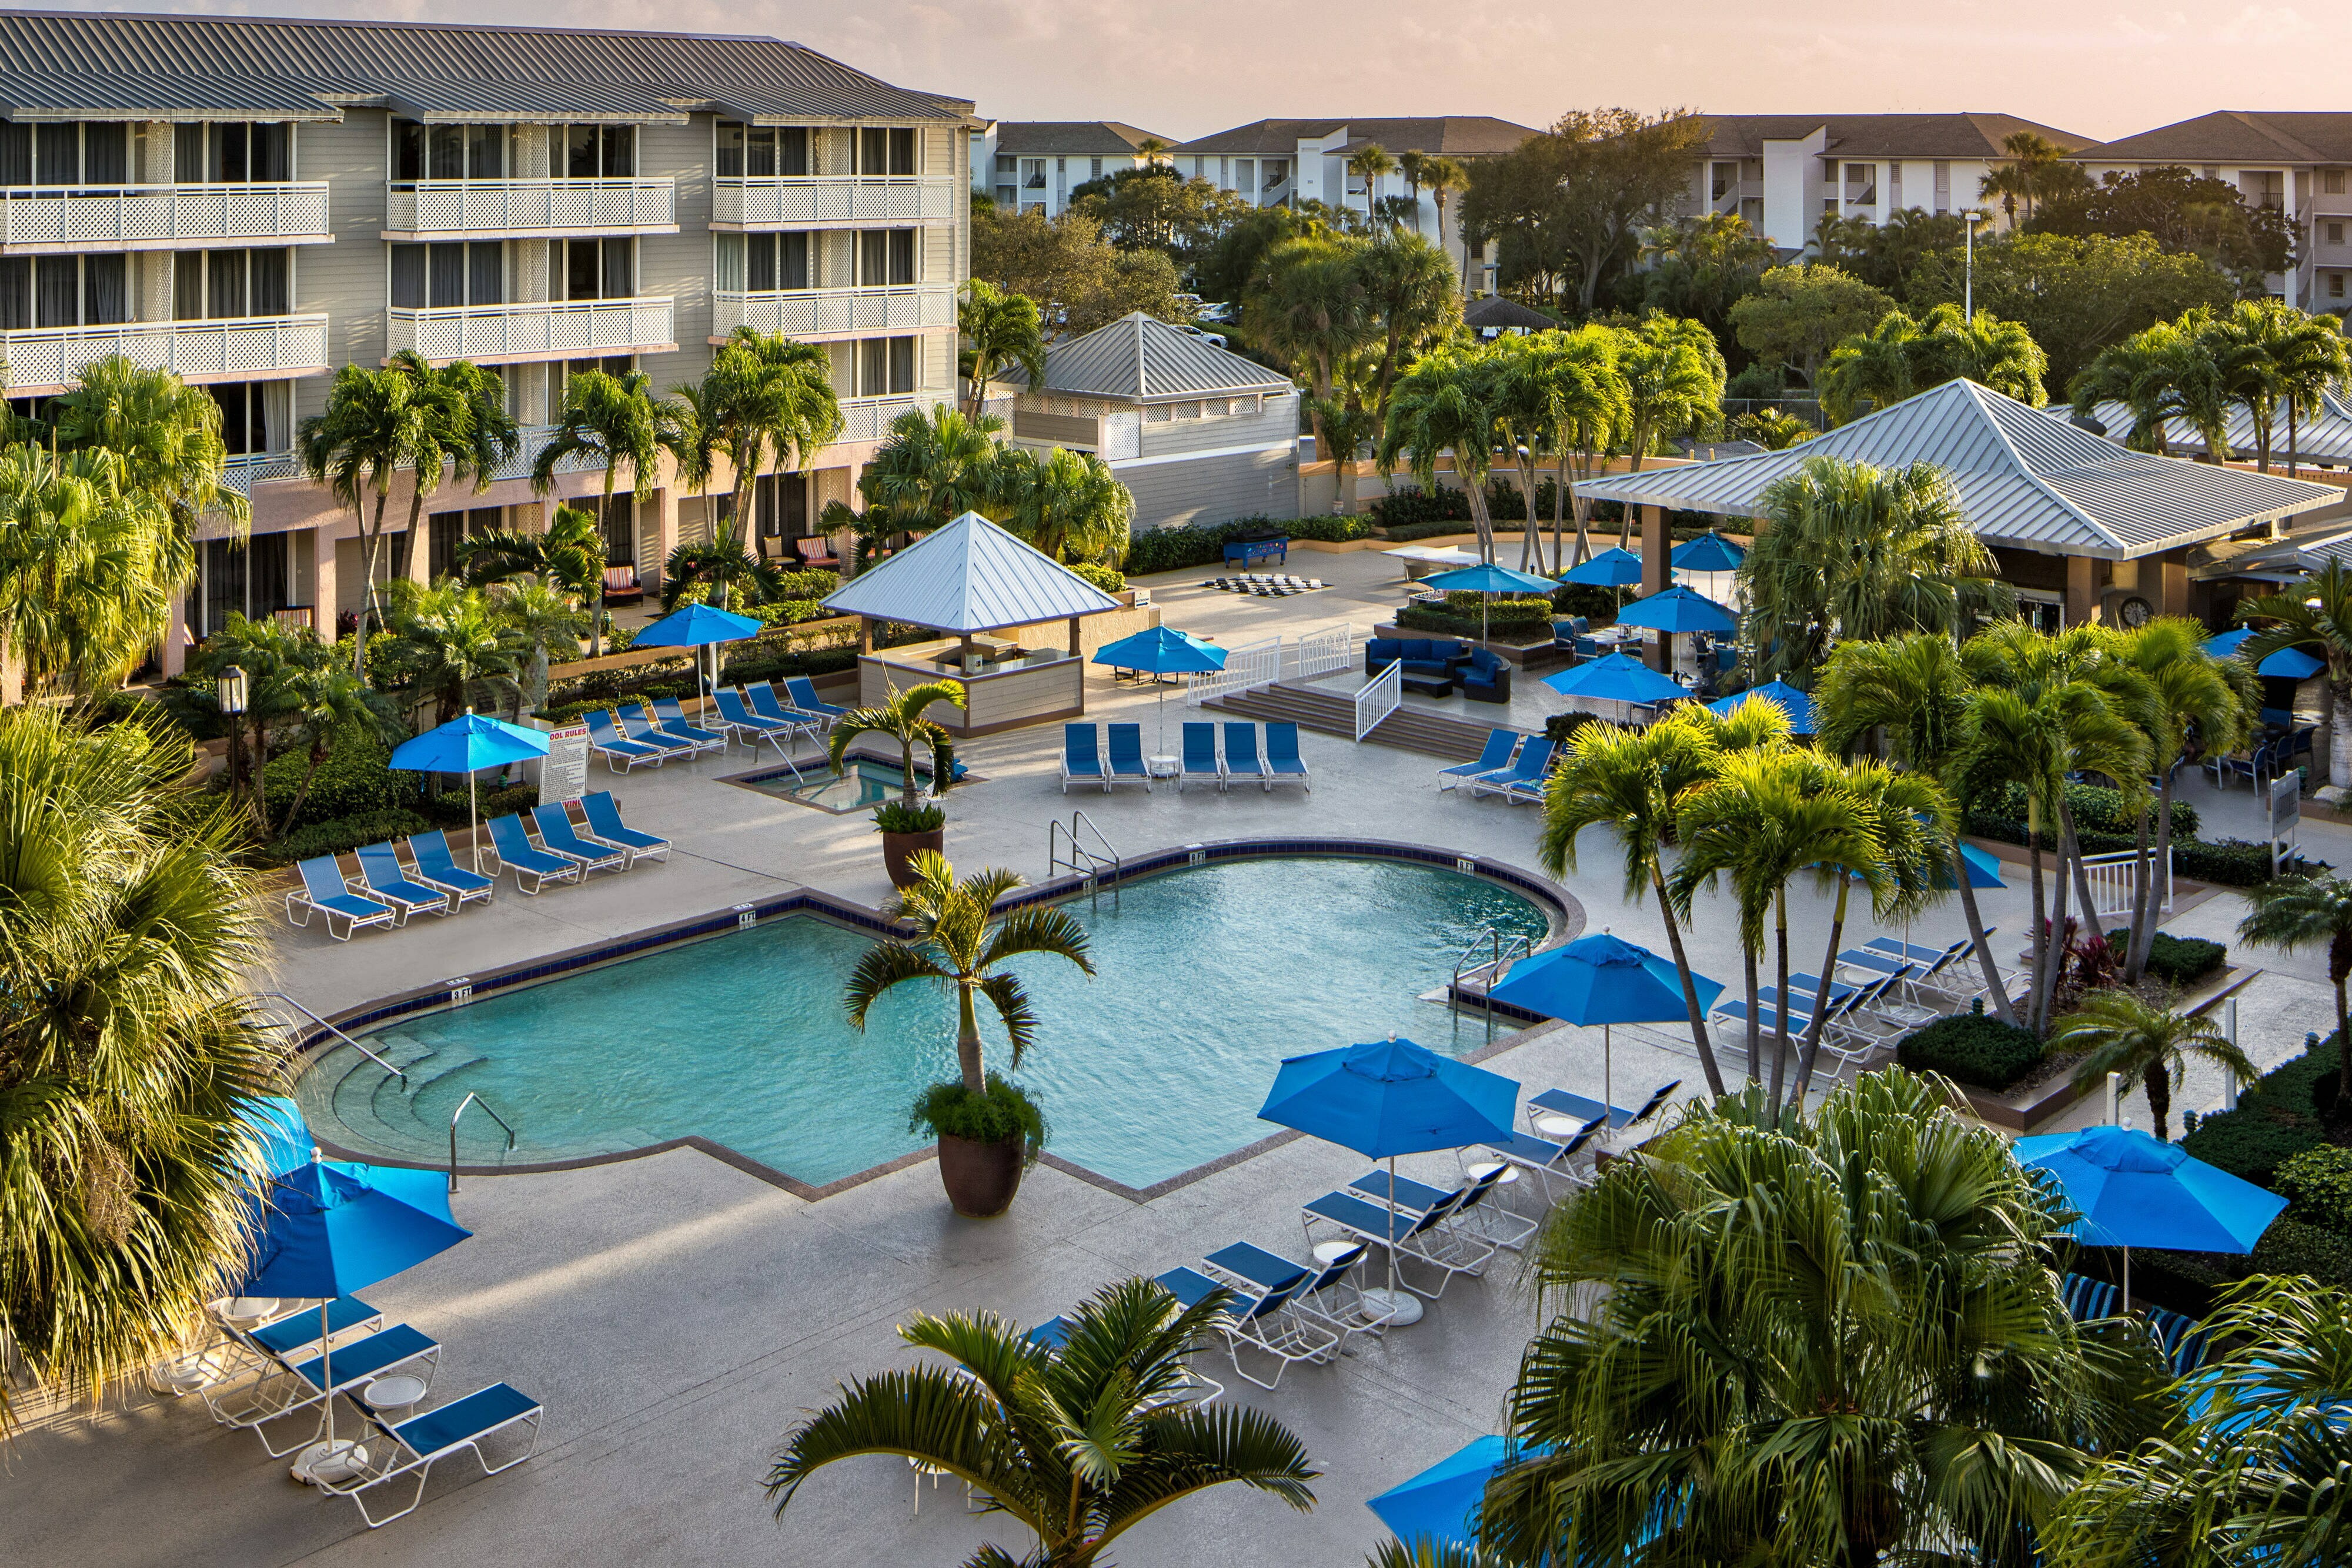 Photo of Marriott Hutchinson Island Beach Resort & Marina, Stuart, FL